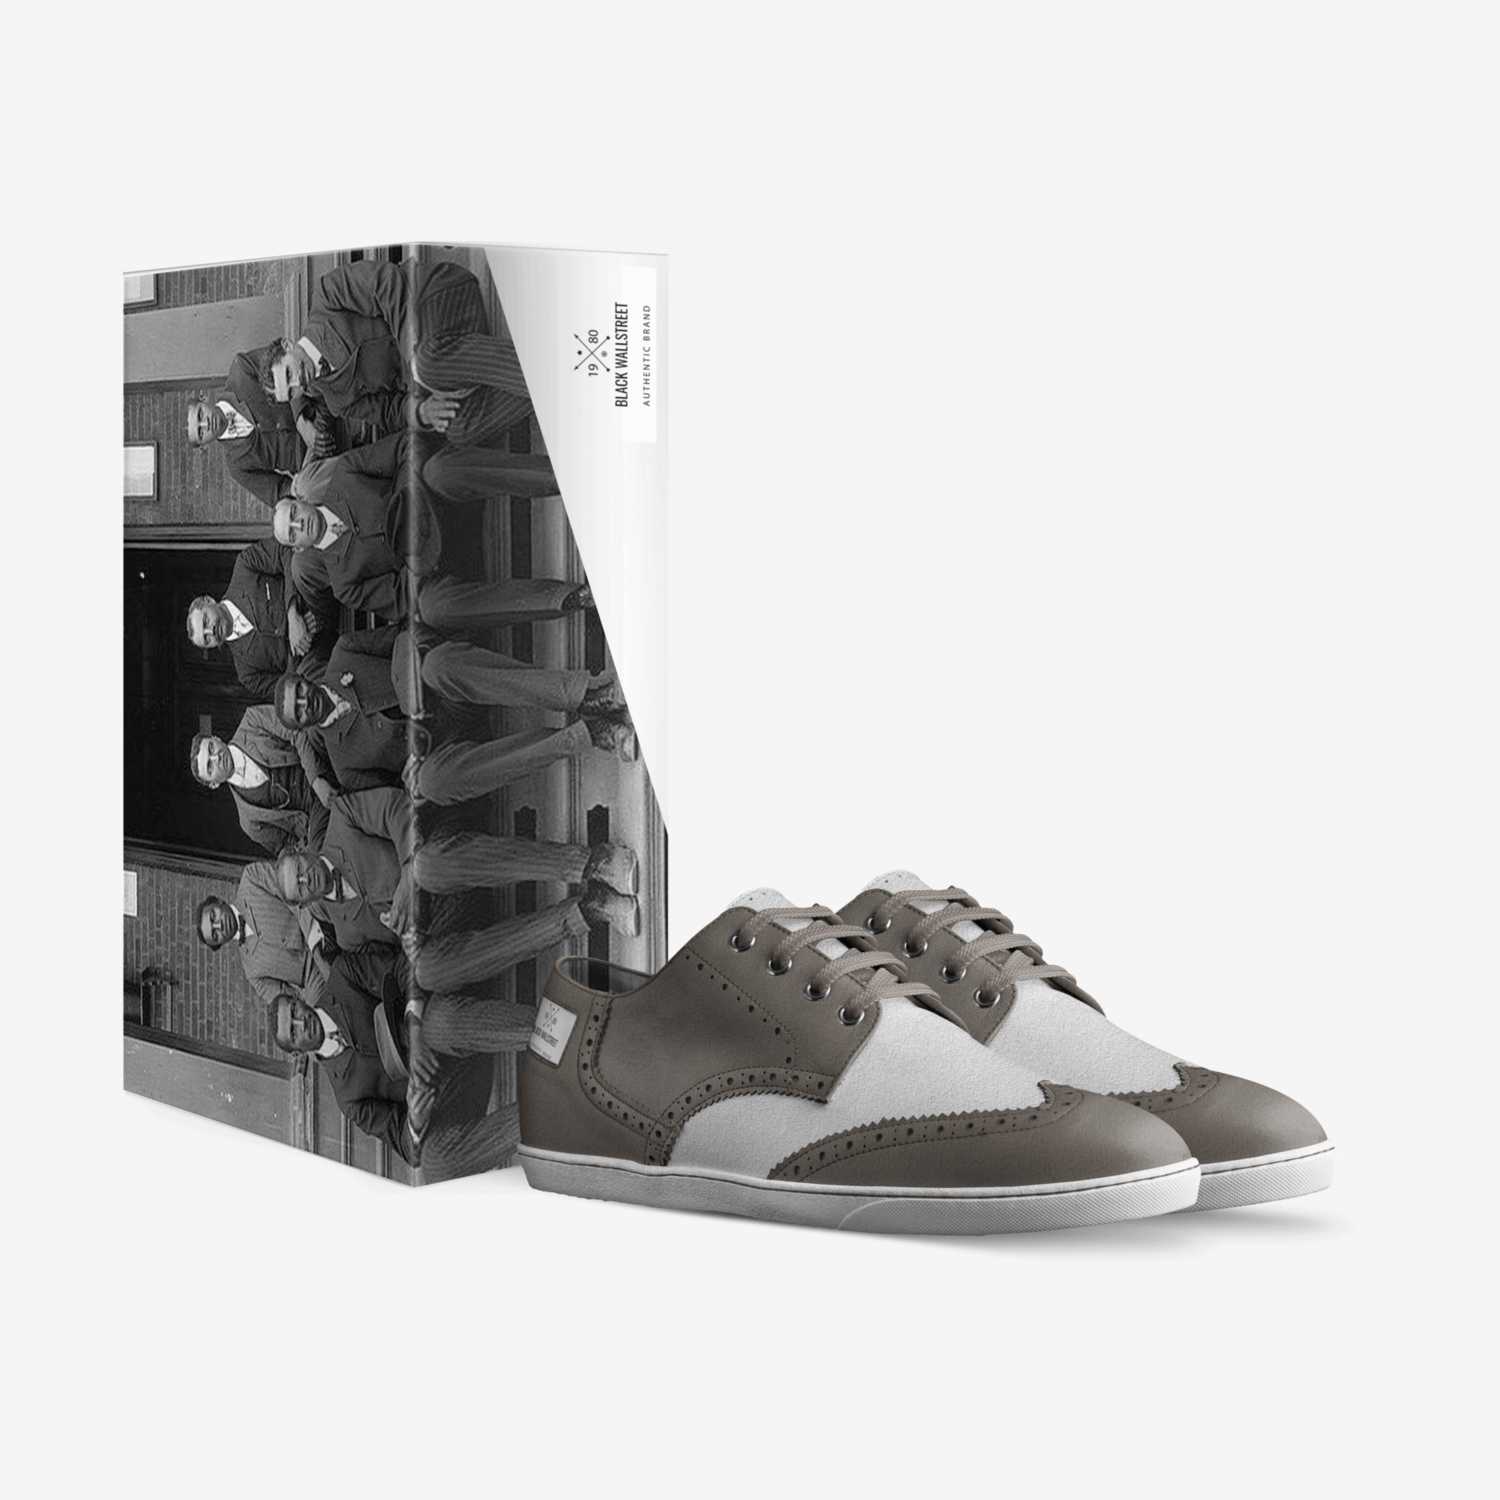 BLACK WALLSTREET custom made in Italy shoes by Moffatt Gordon | Box view